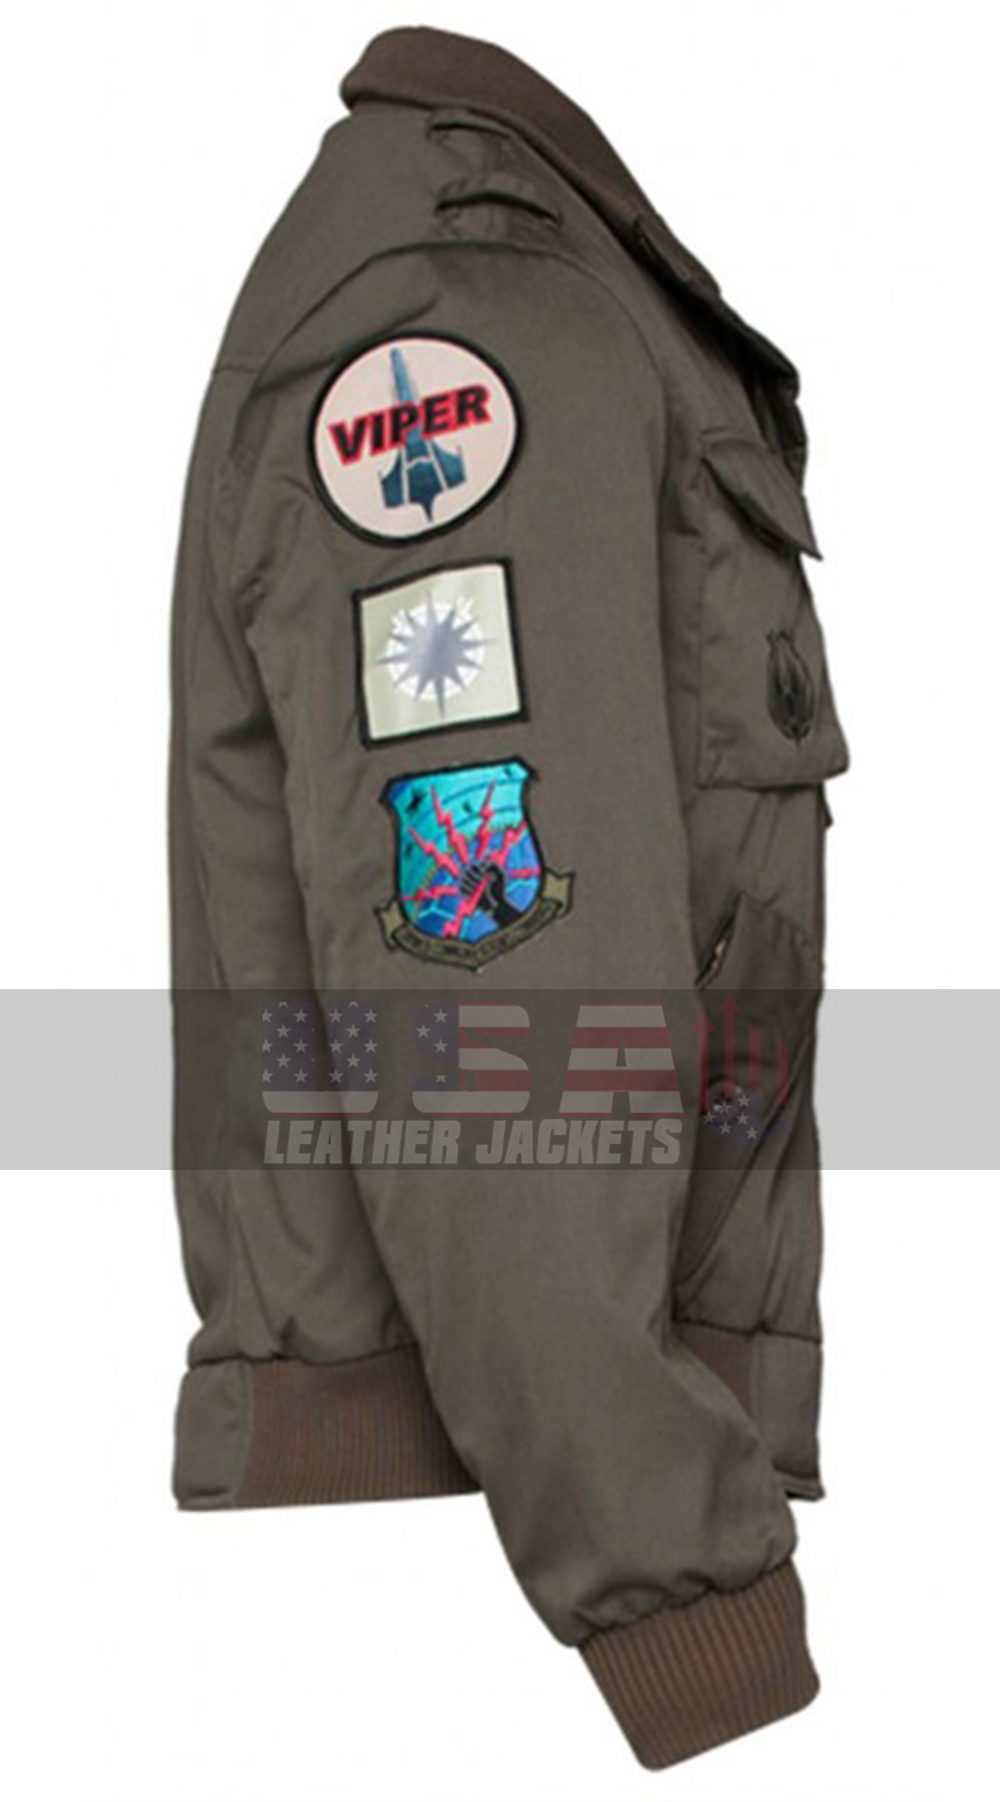 Apollo Adama Battlestar Galactica Jamie Bamber Costume Jacket